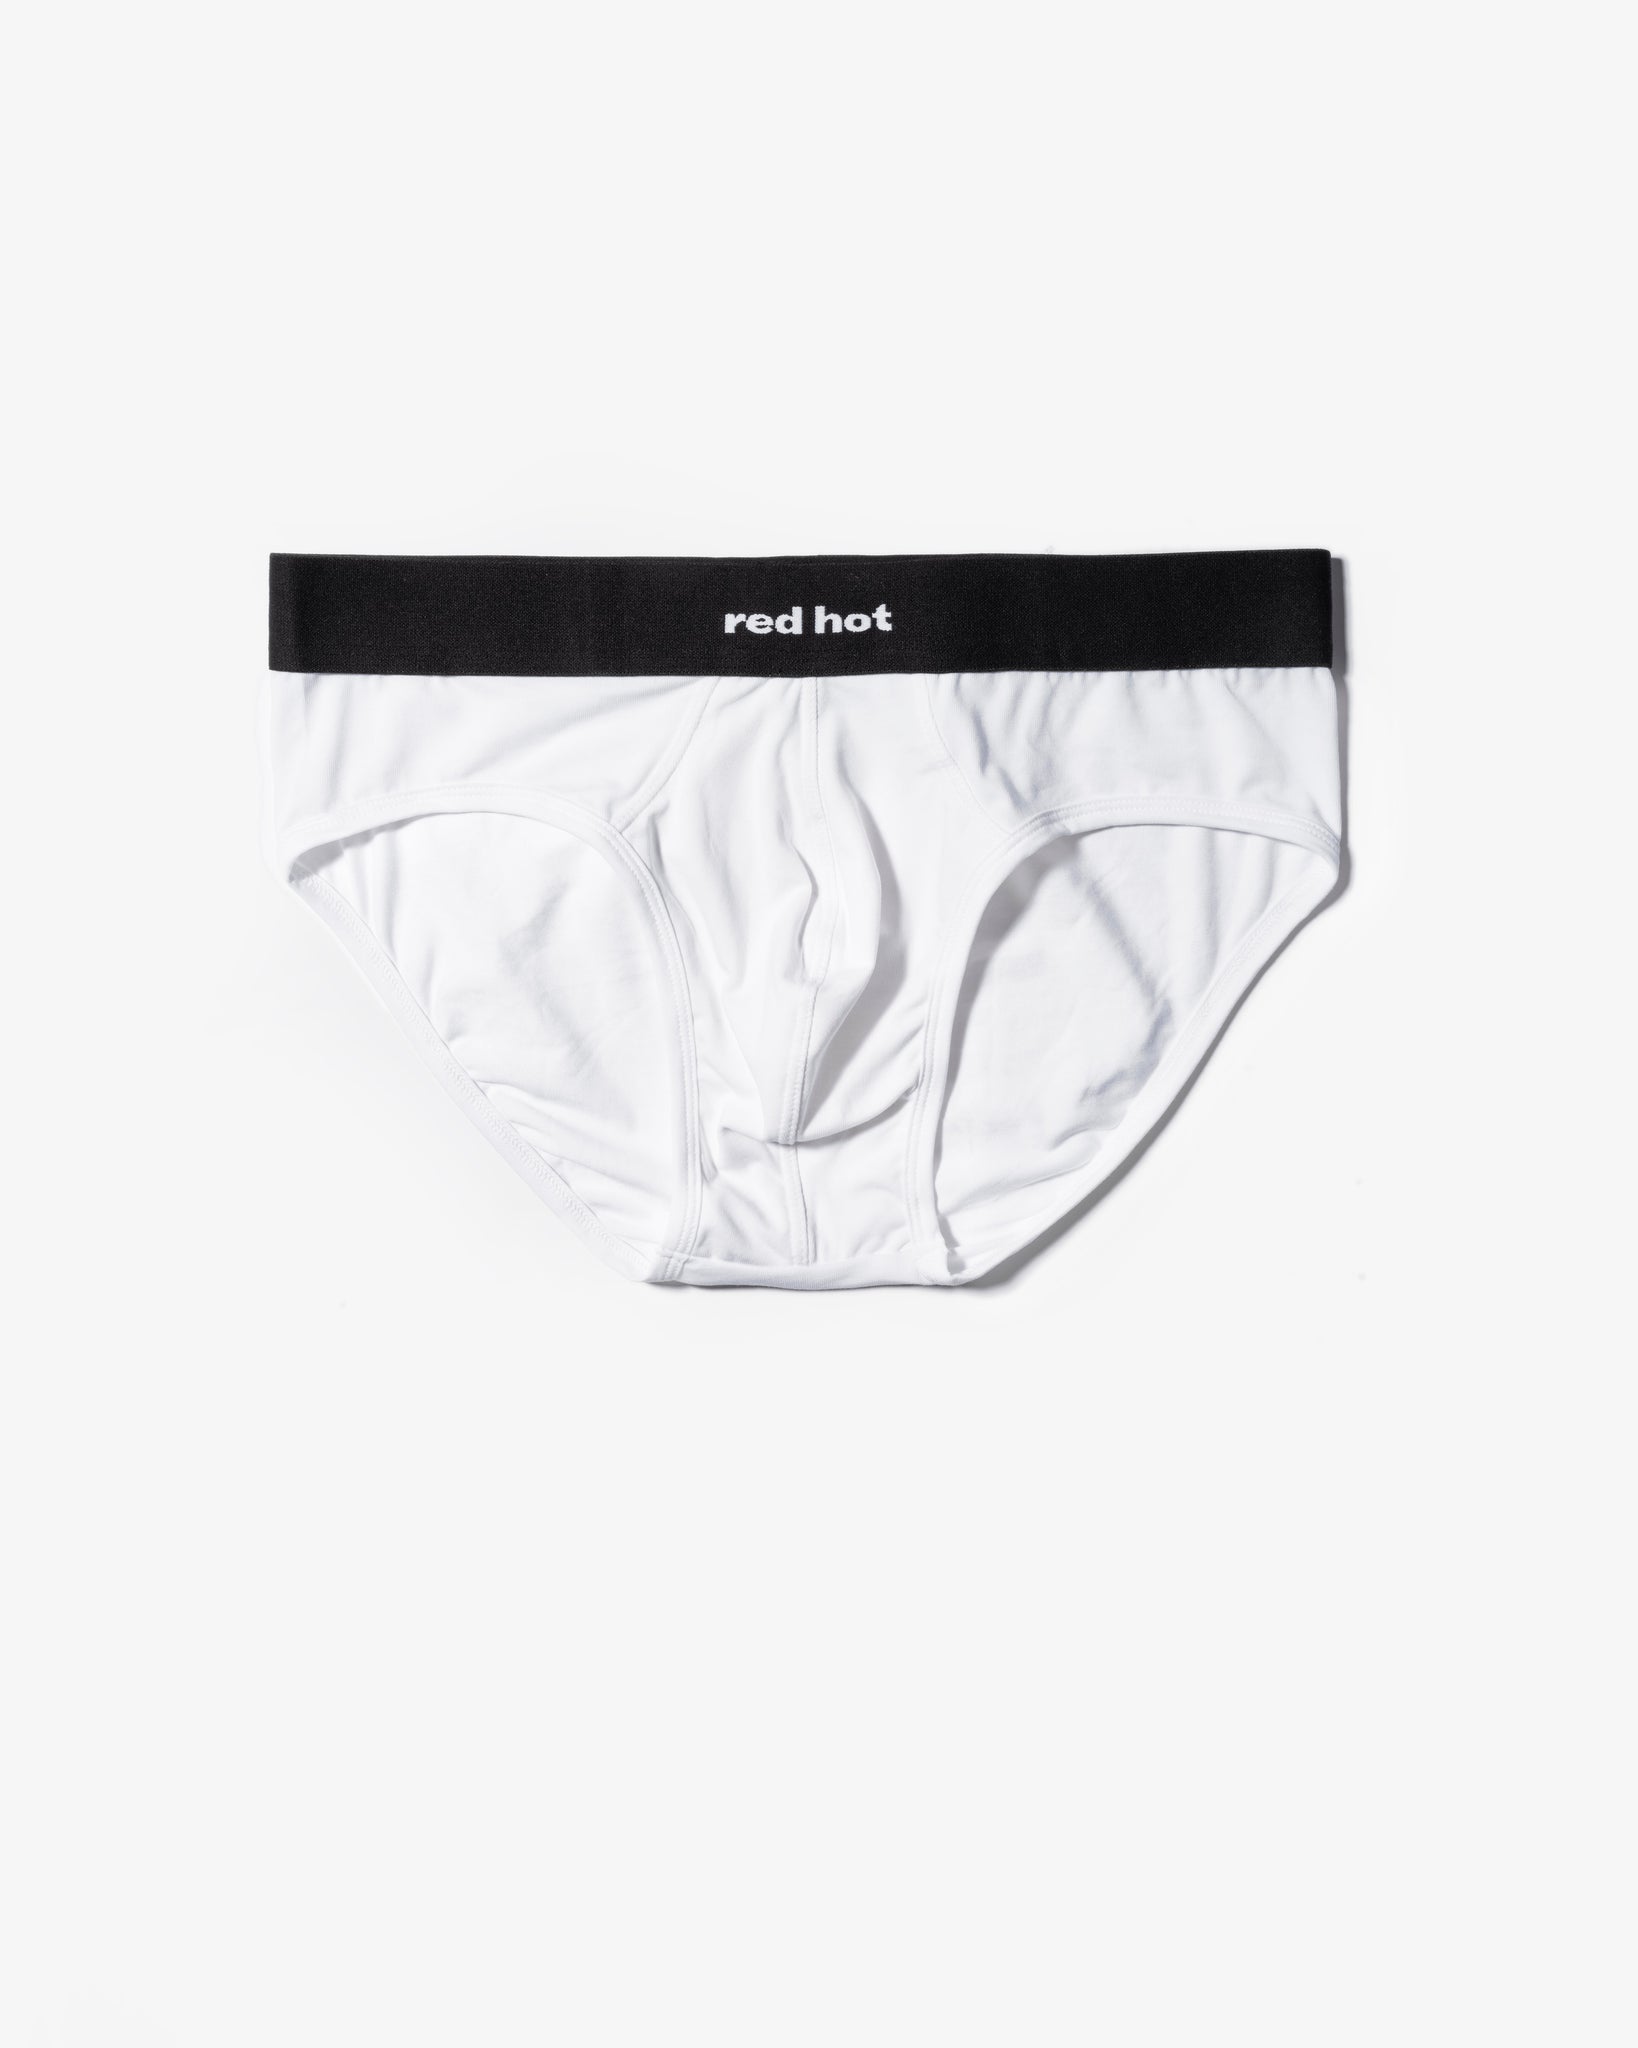 Men's Hip Brief Duo-Tone, Men's underwear